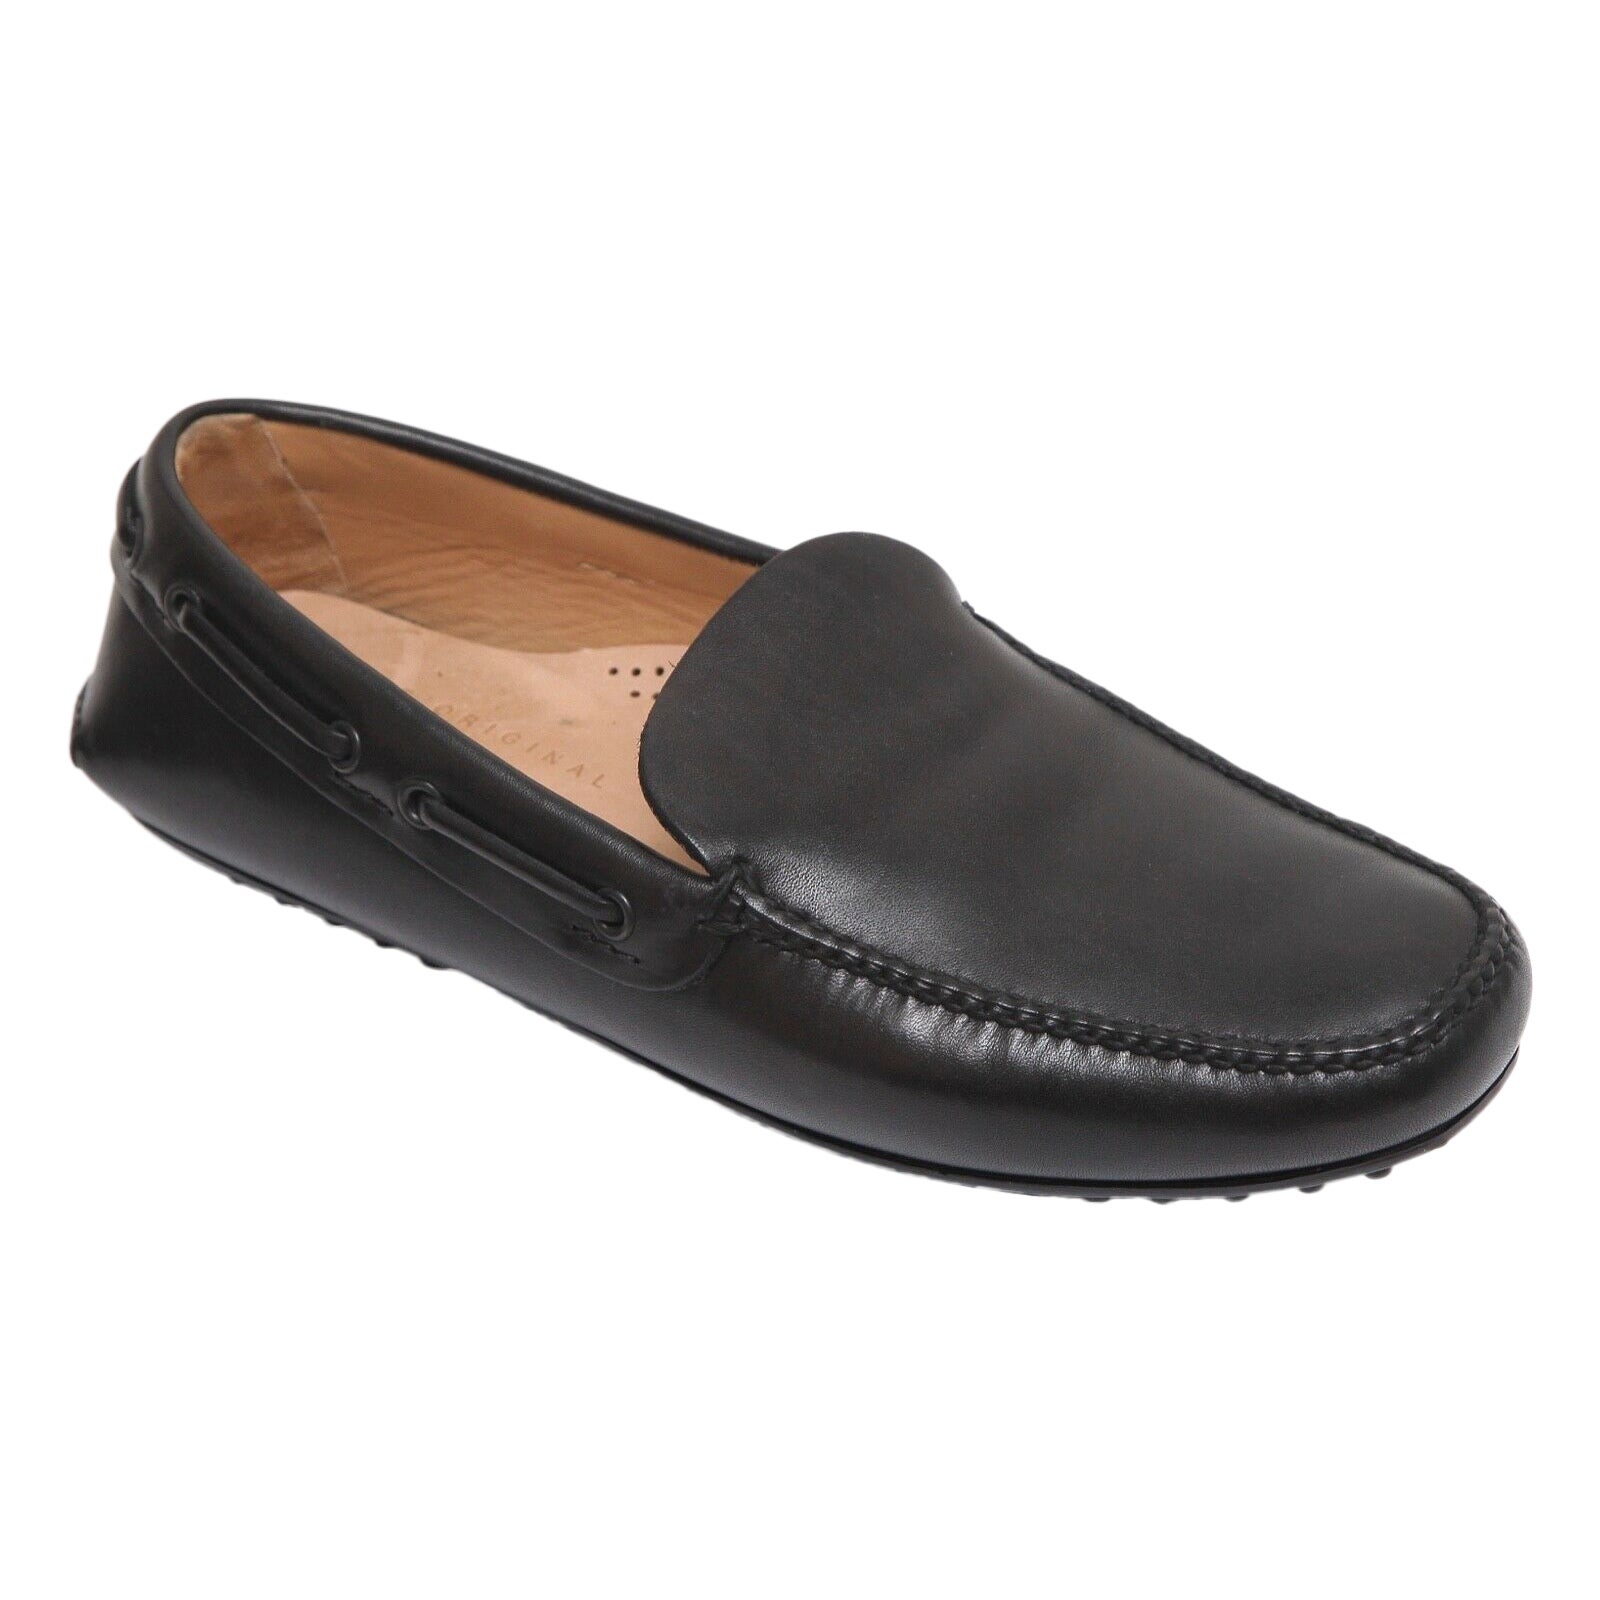 THE ORIGINAL CAR SHOE by PRADA - Chaussures en cuir noir Loafer Moccasin -  Taille 7 En vente sur 1stDibs